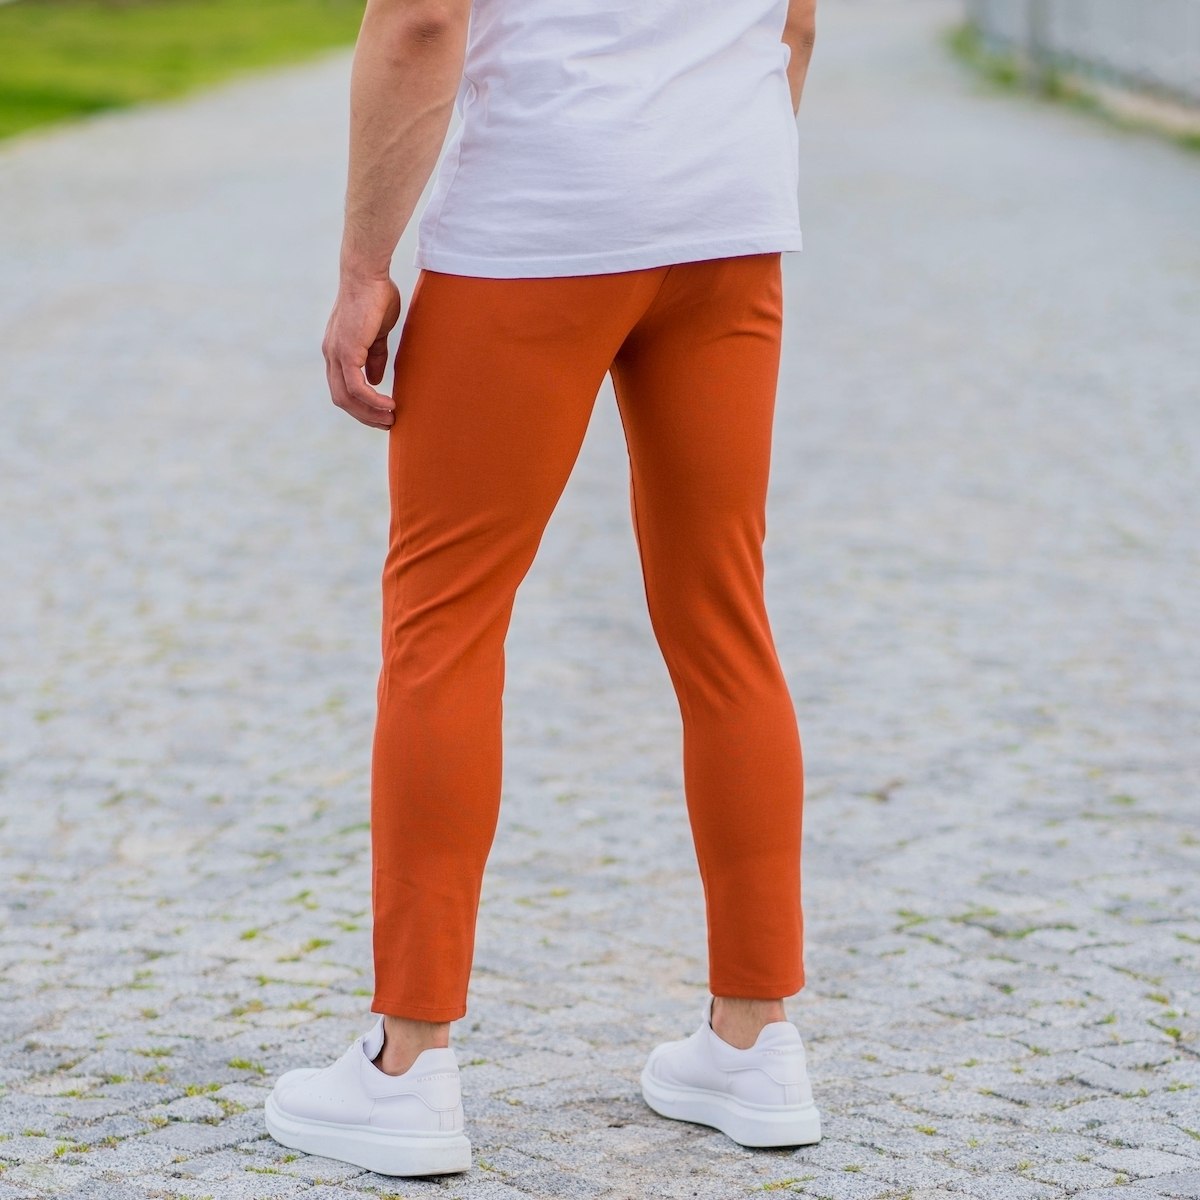 Herren Slim-Fit Hose in orange - 5